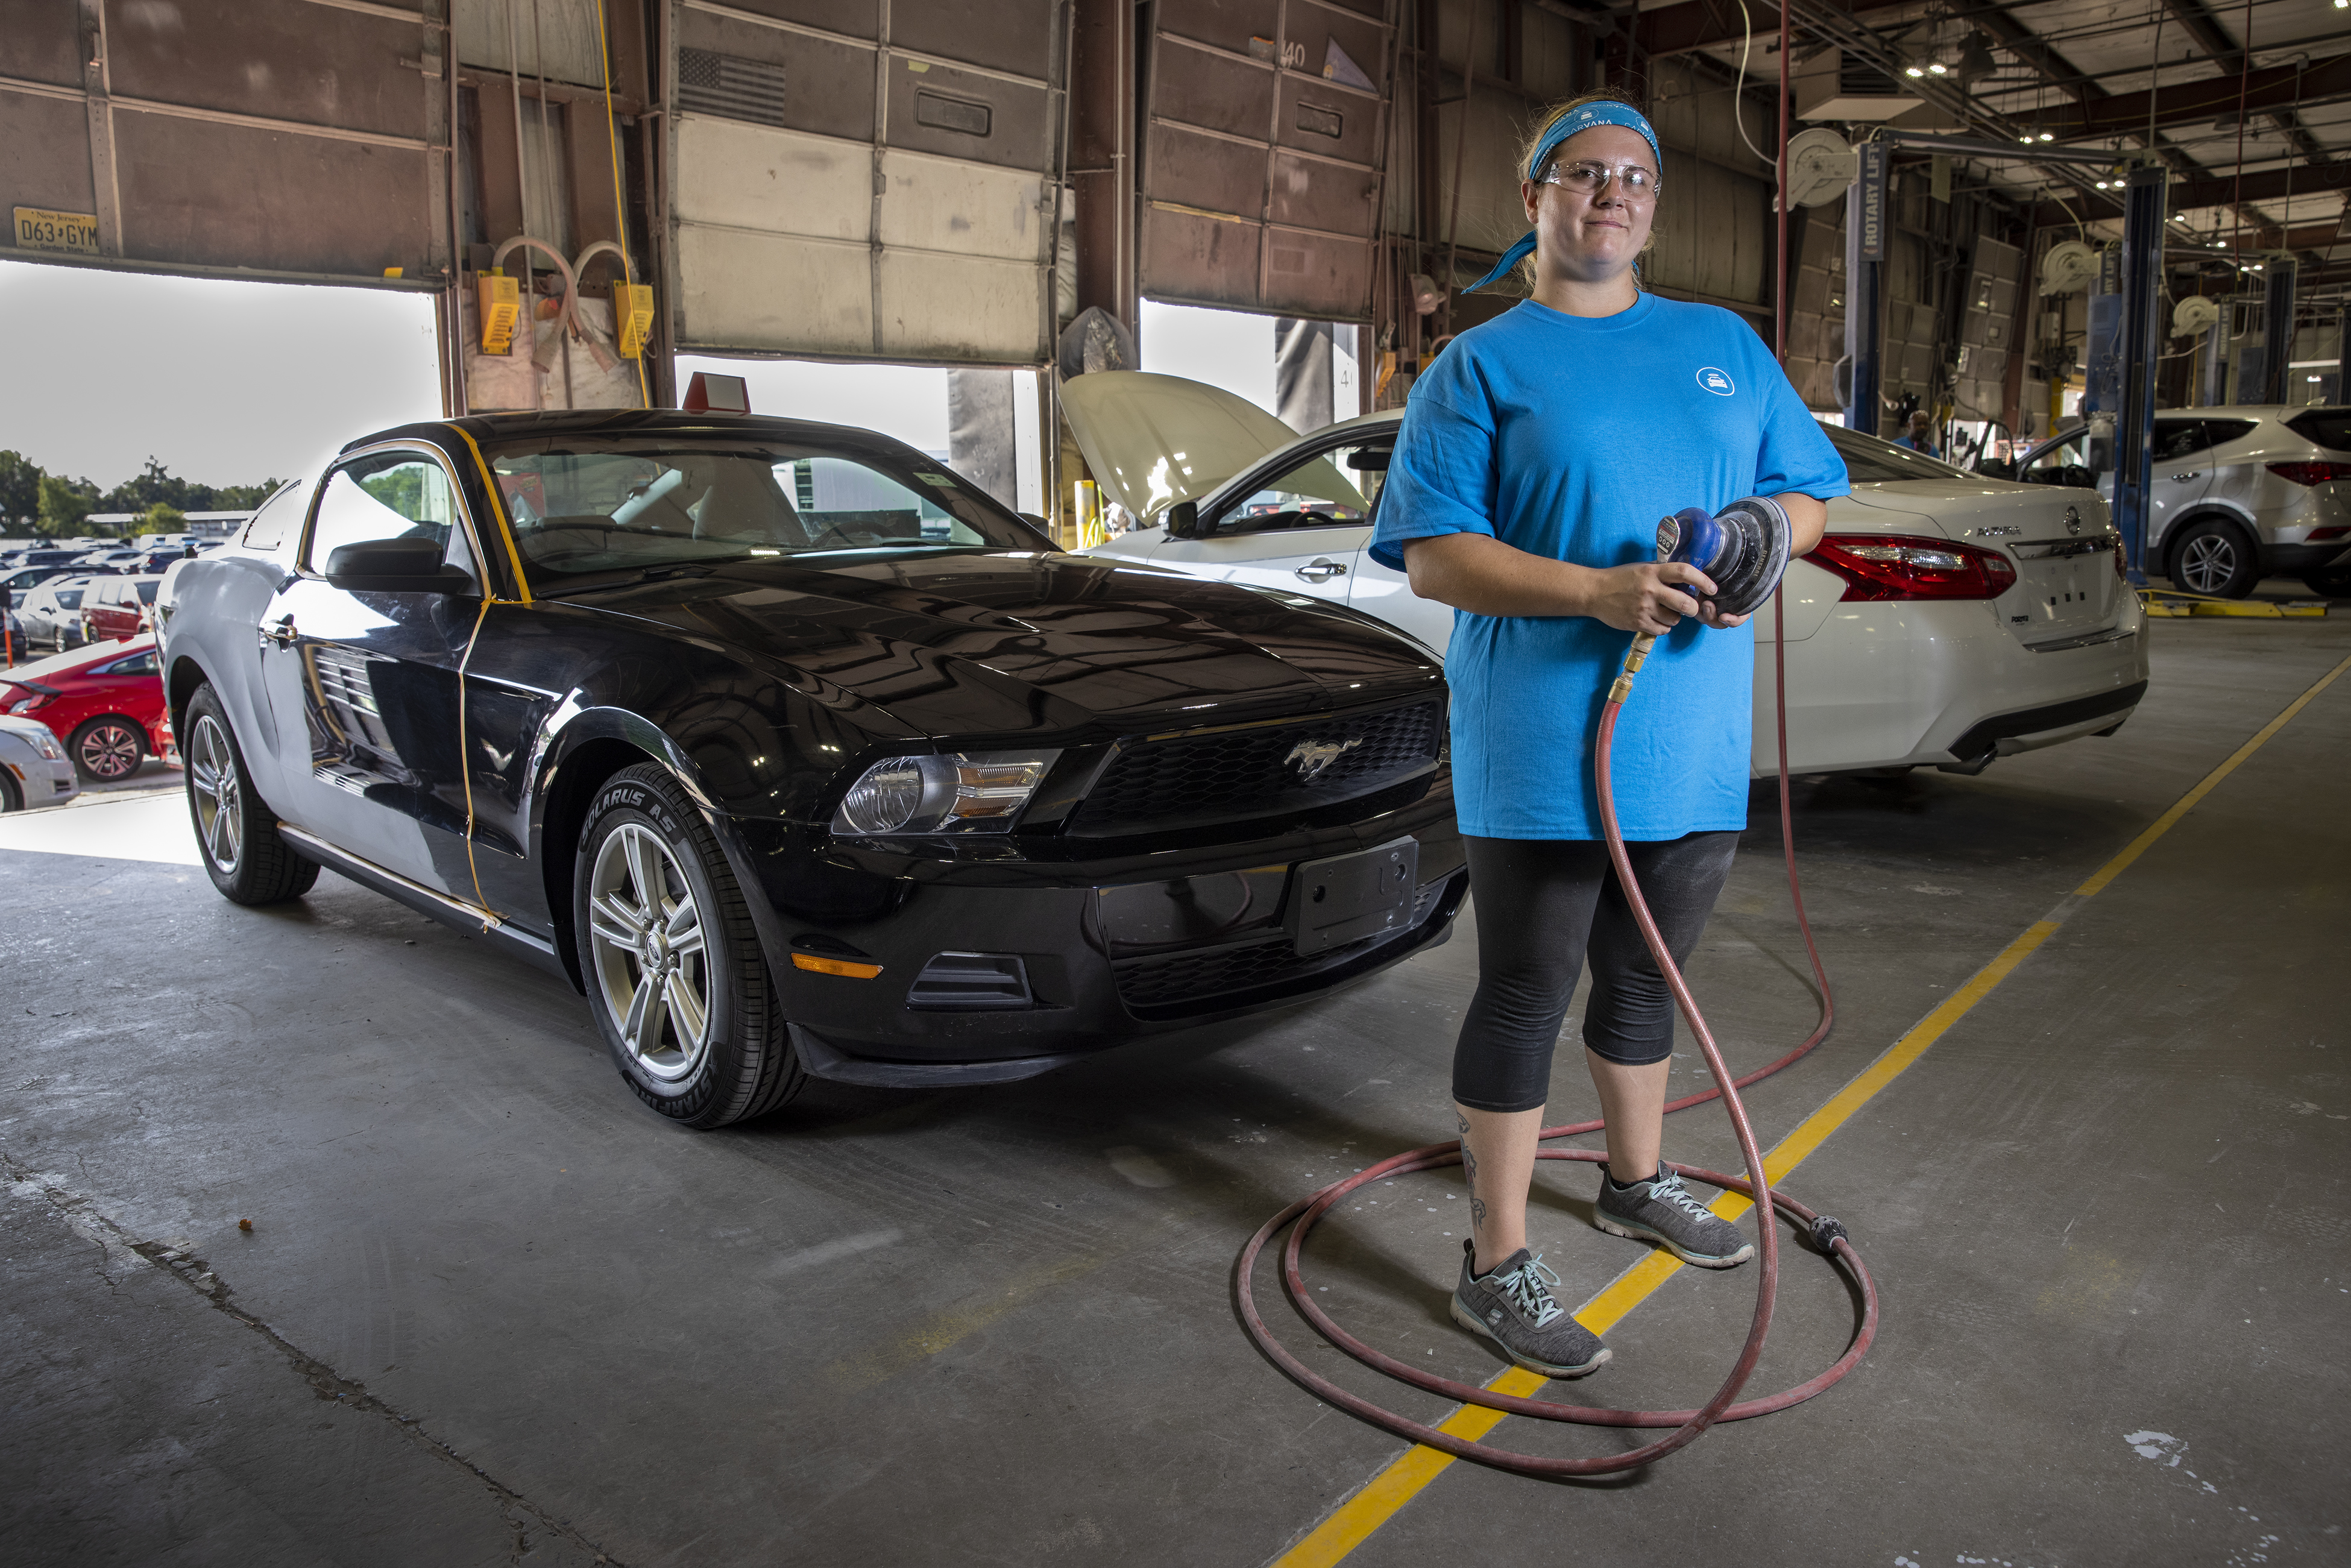 Automotive repair undergoes transition